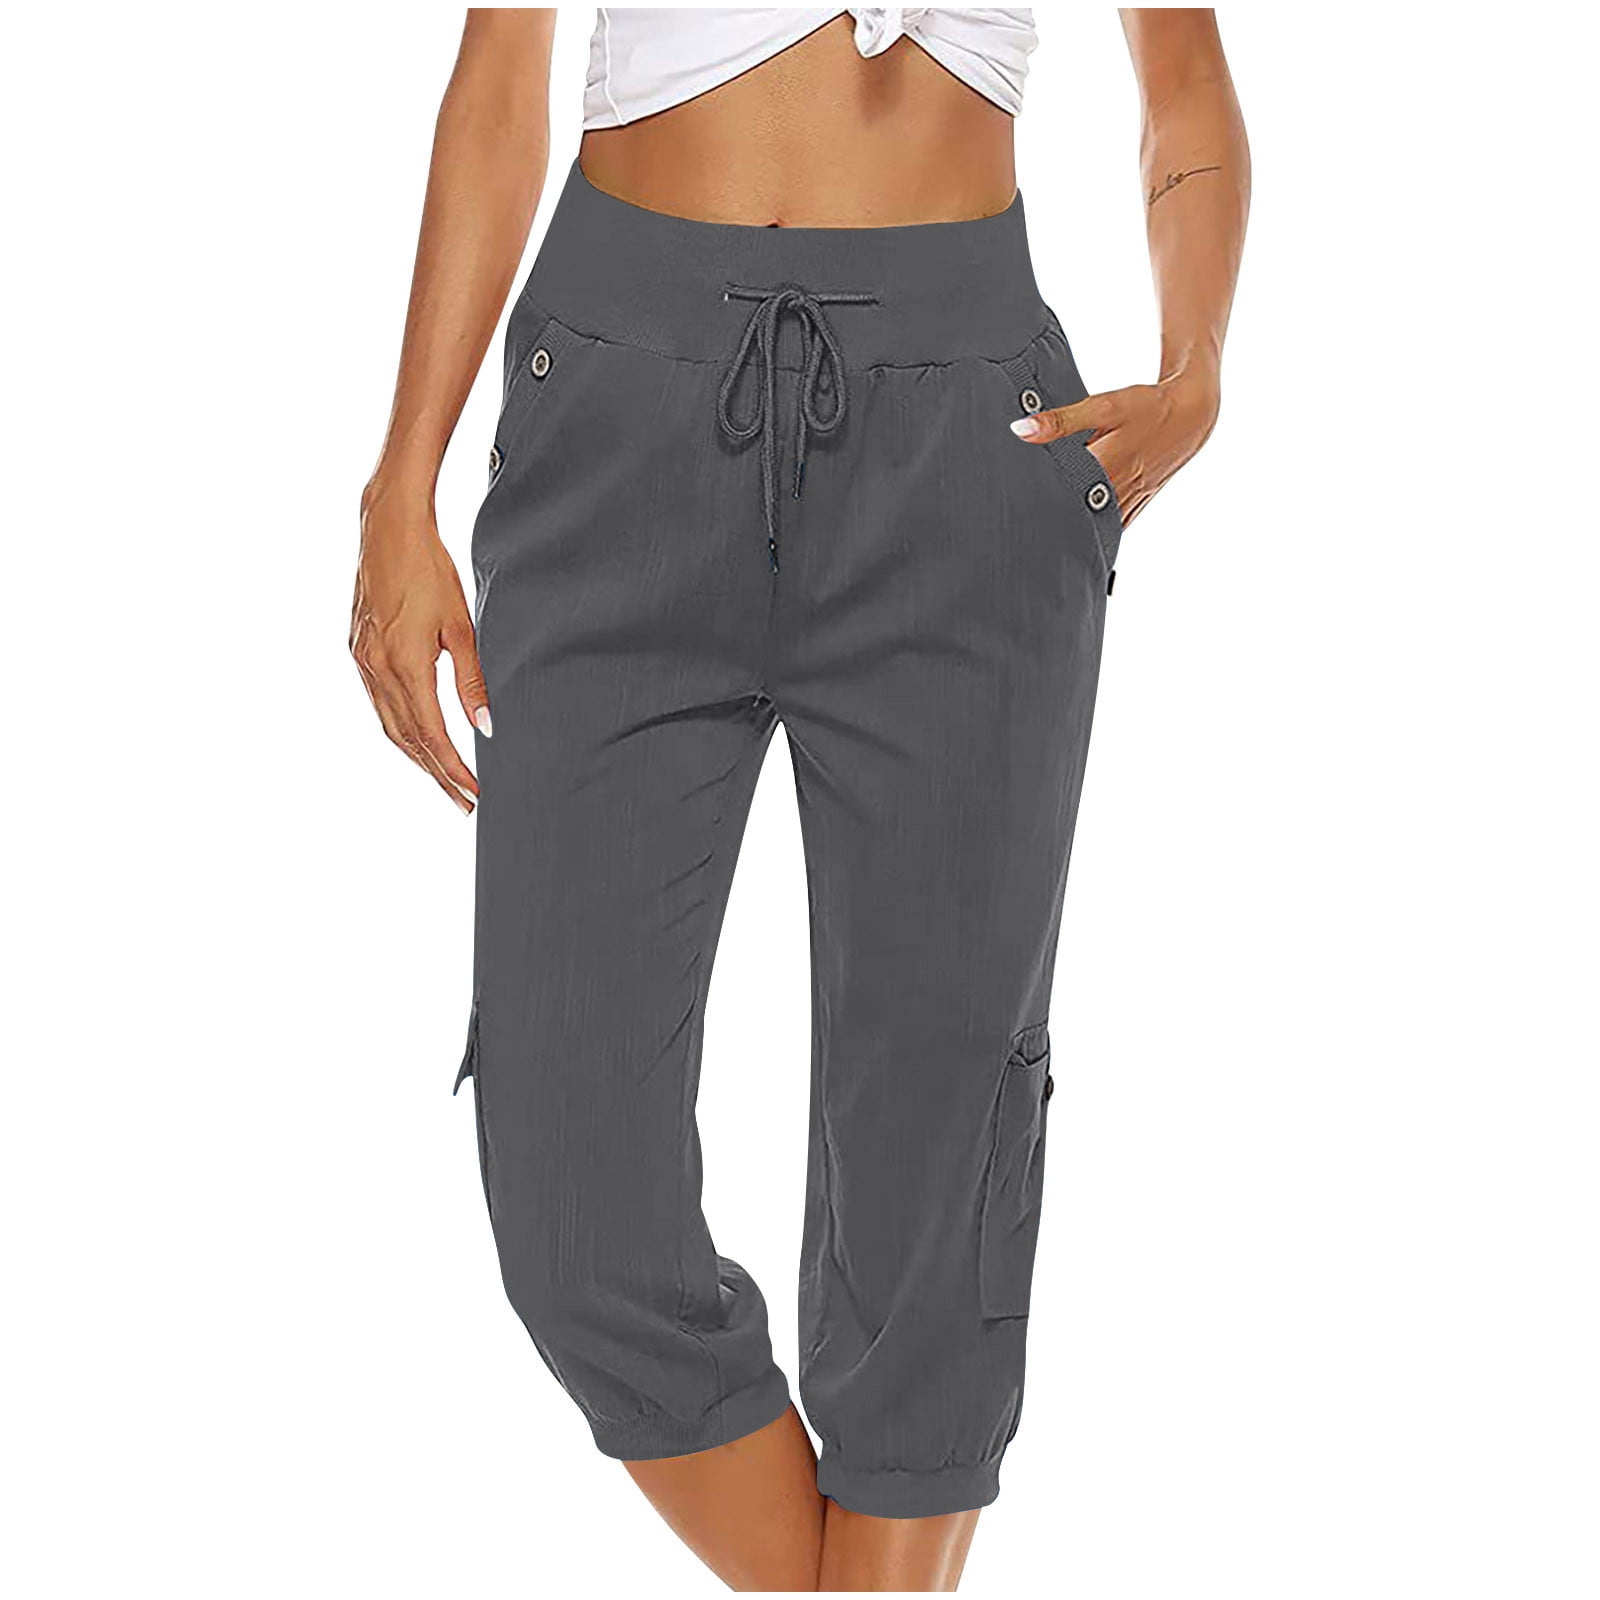 Capri Pants for Women Cotton Linen Plus Size Cargo Pants Capris Elastic  High Waisted 3/4 Slacks with Multi Pockets (Small, Brown) 